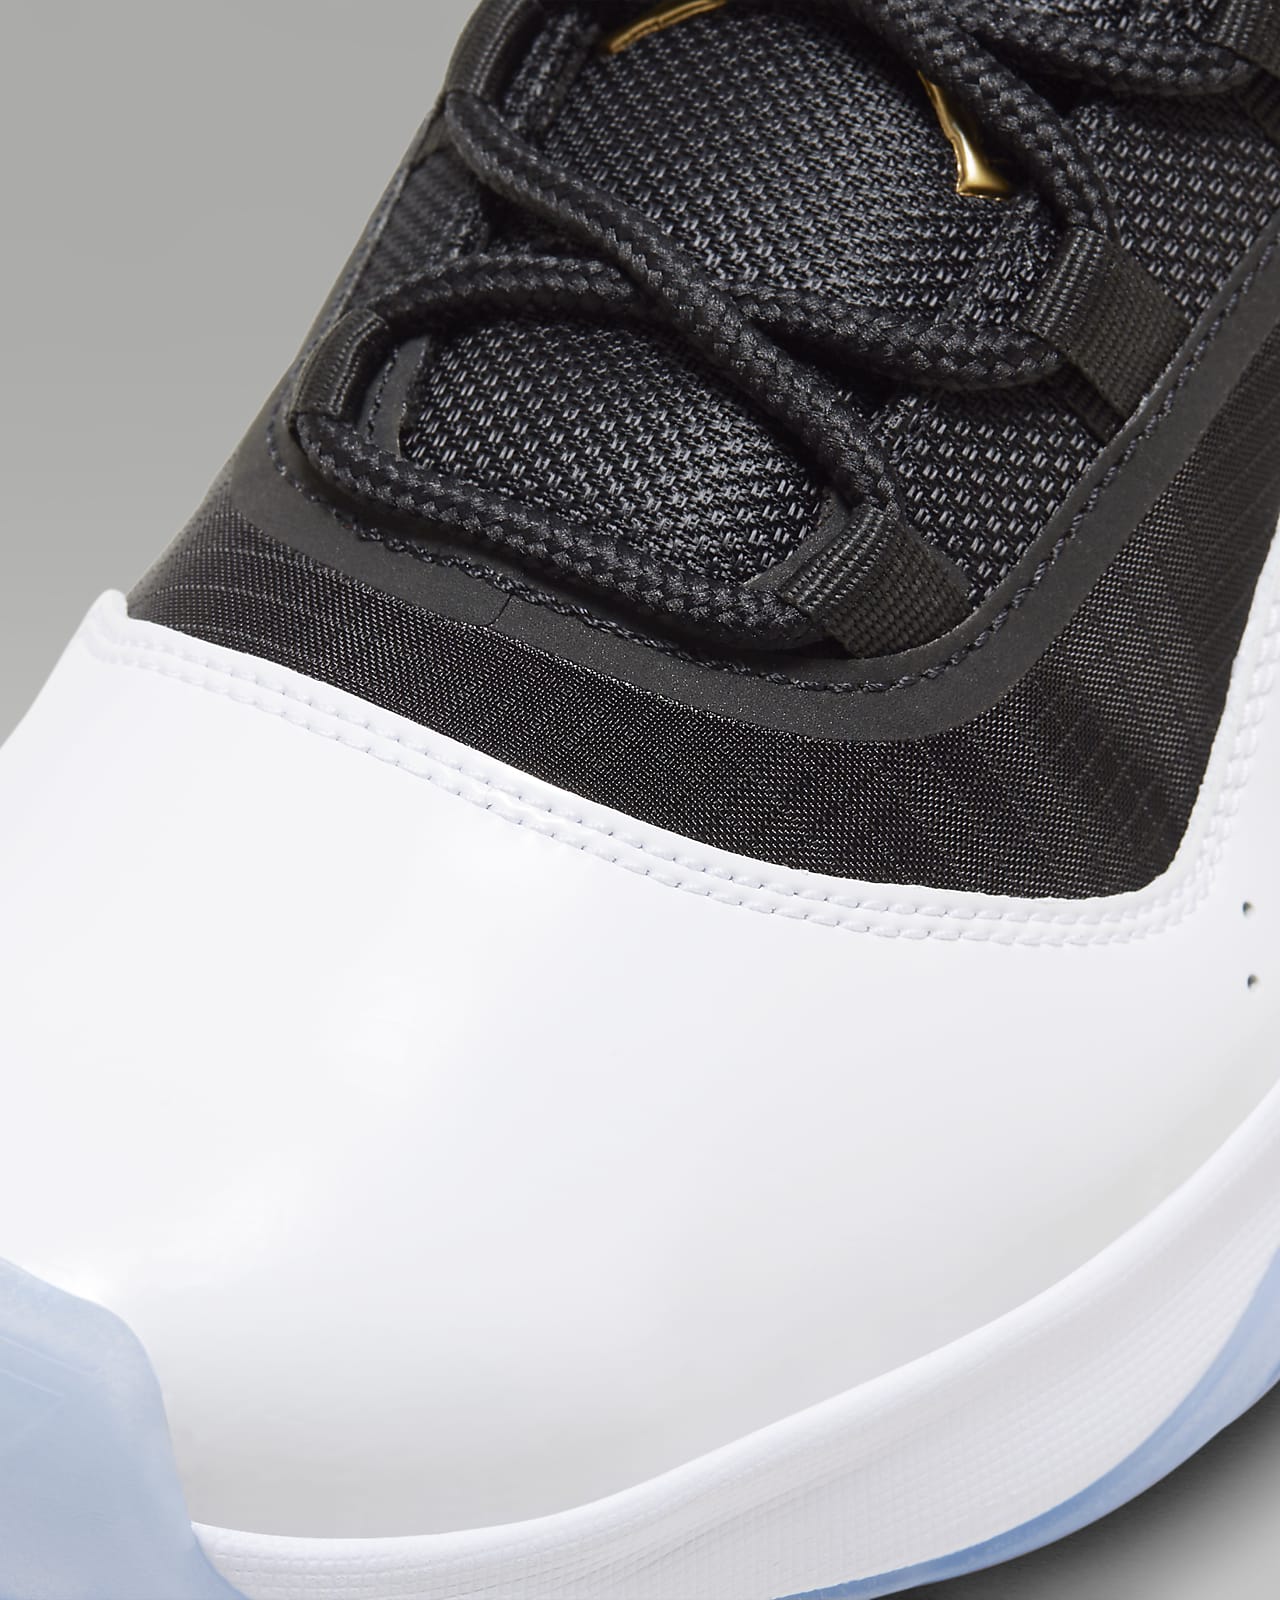 NEW FASHION] Ralph Lauren Air Jordan 11 Sneakers Gifts For Men Women